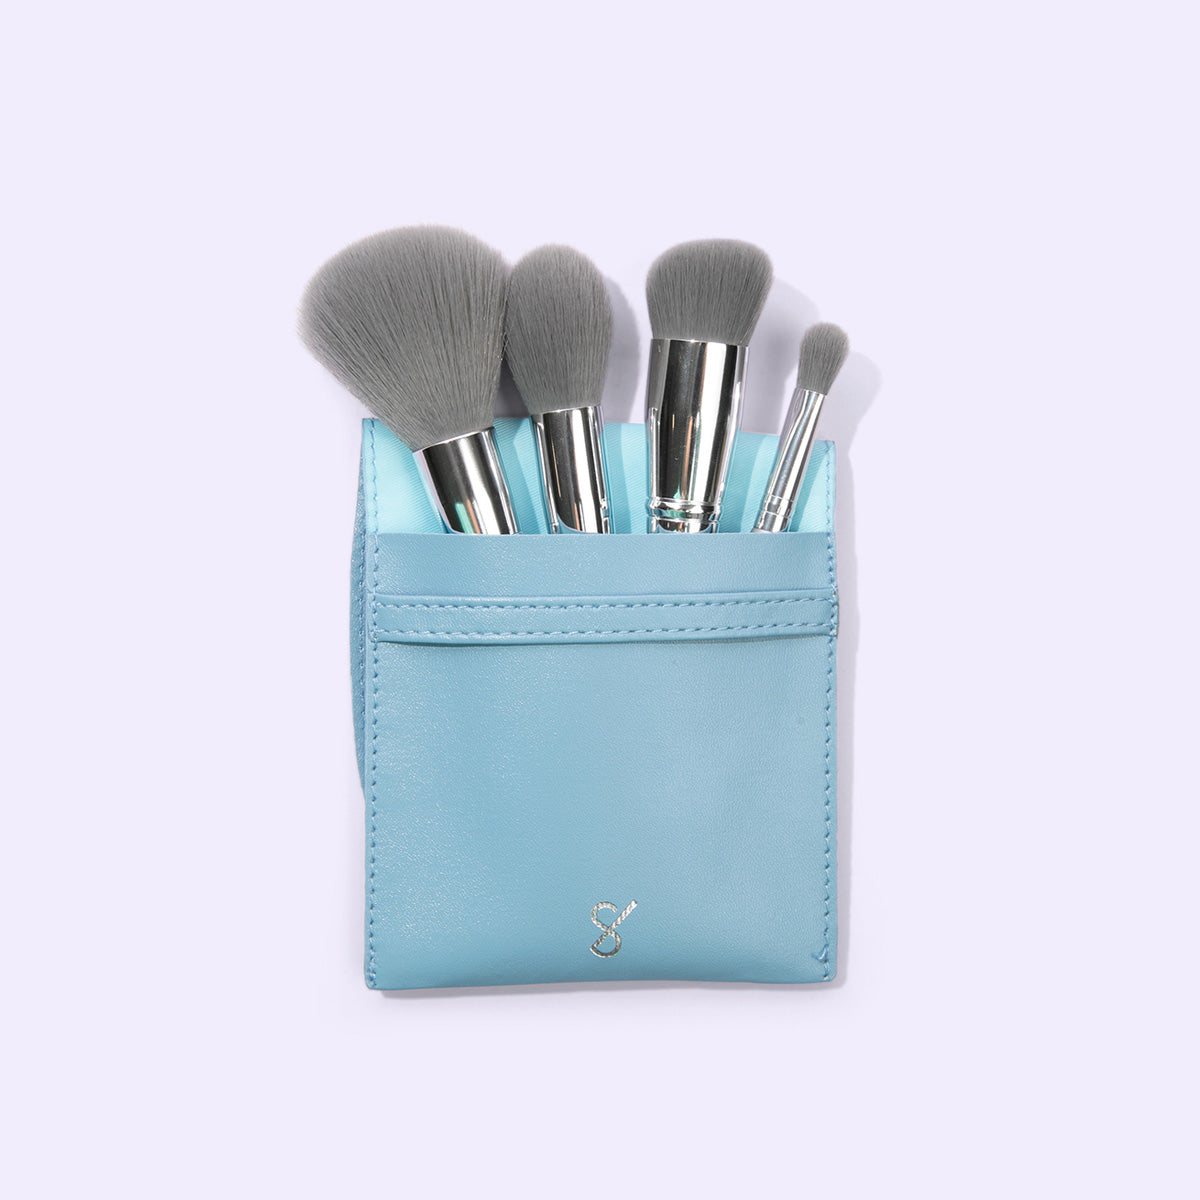 Travel Makeup Brush 4-Piece Set | Carry-On Kit | Small, Compact Design